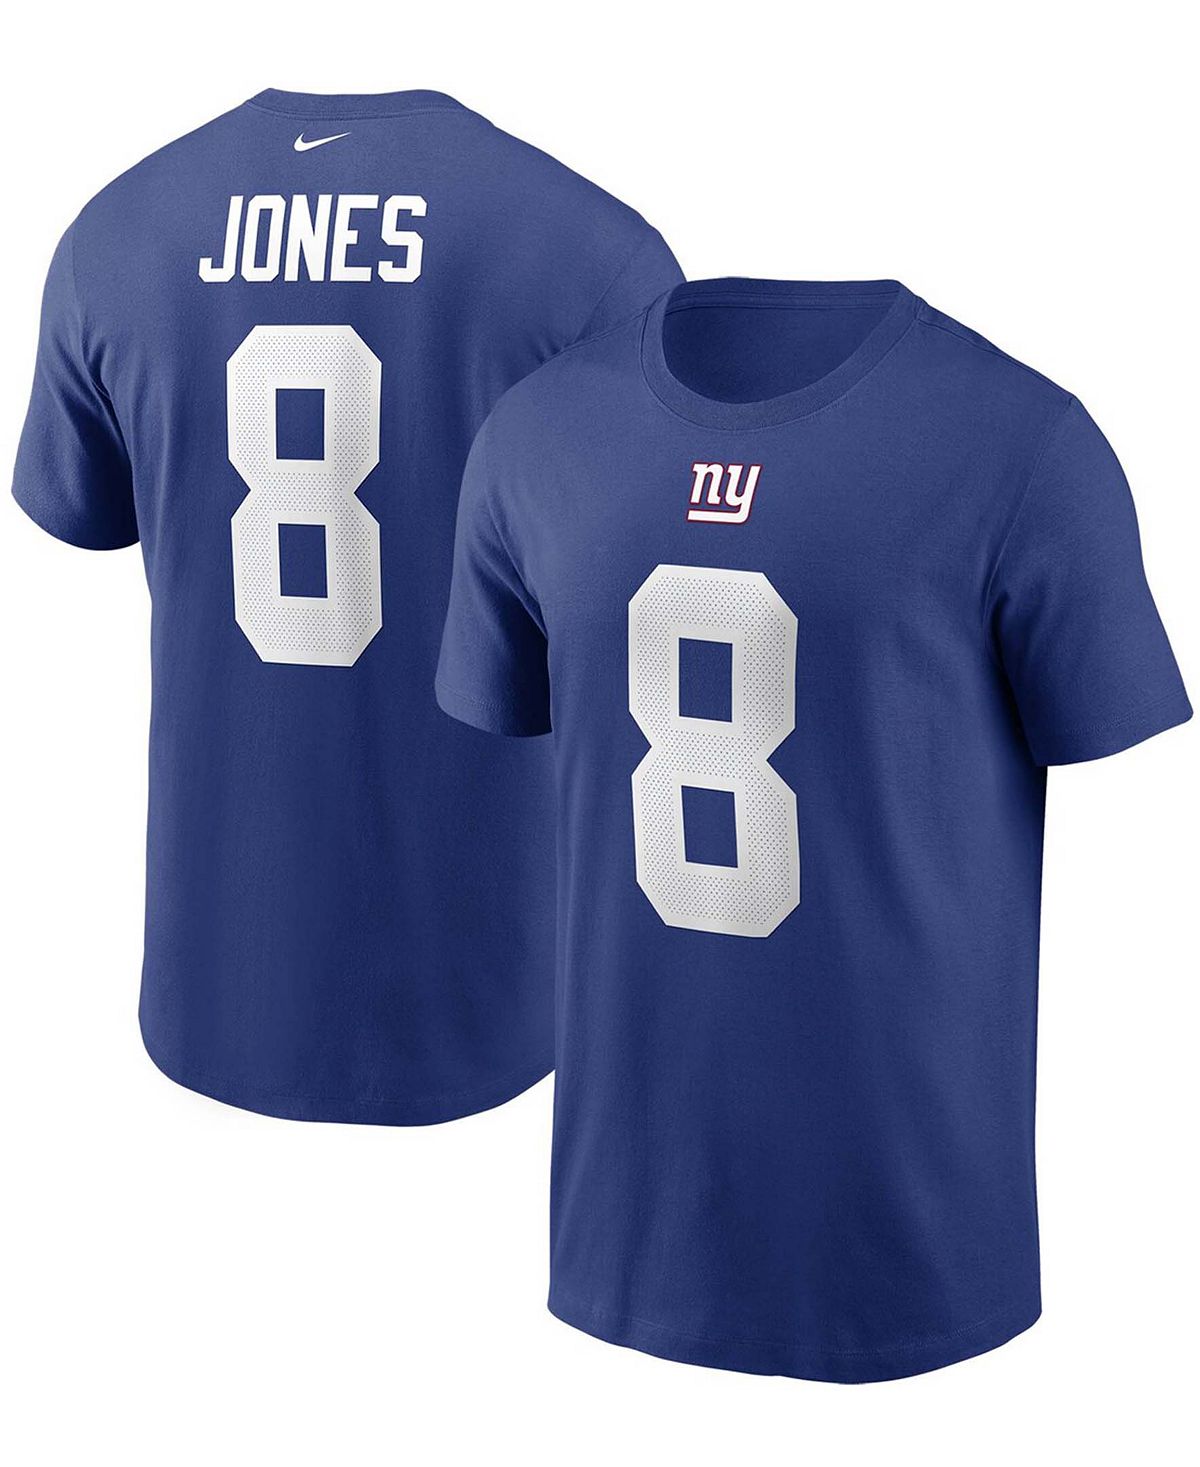 цена Мужская футболка с именем и номером Daniel Jones Royal New York Giants Nike